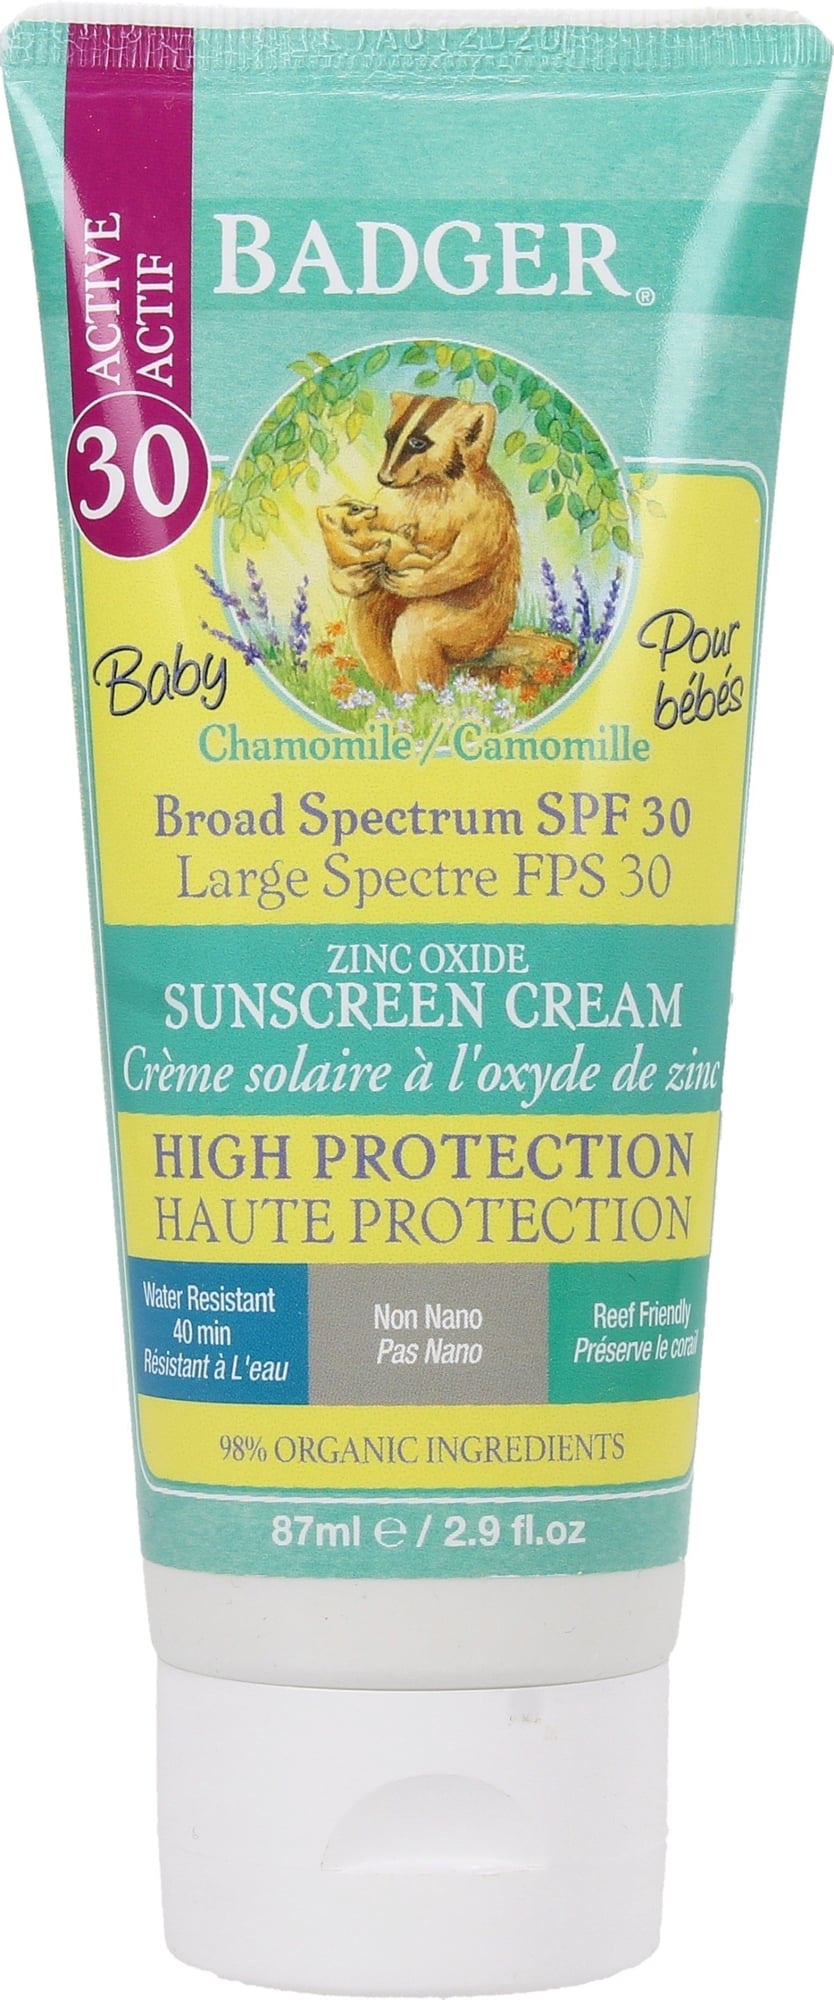 Badger Sunscreen Cream